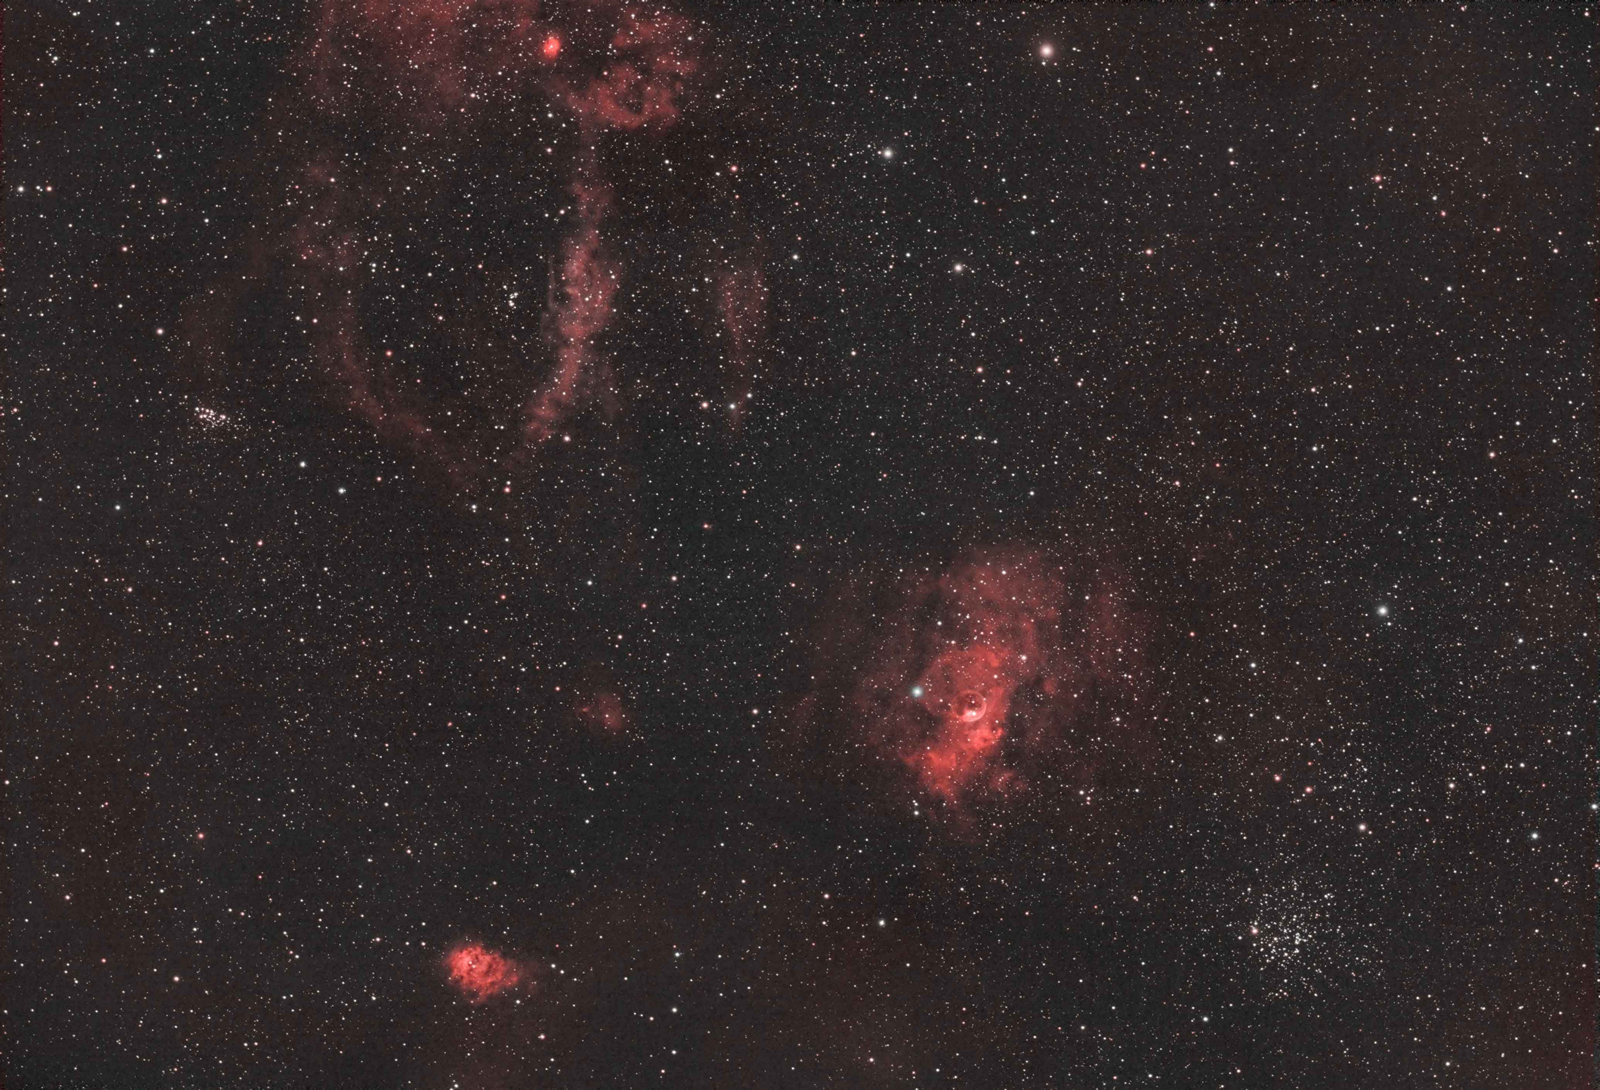 NGC7635_L_RGB_projet3_PS